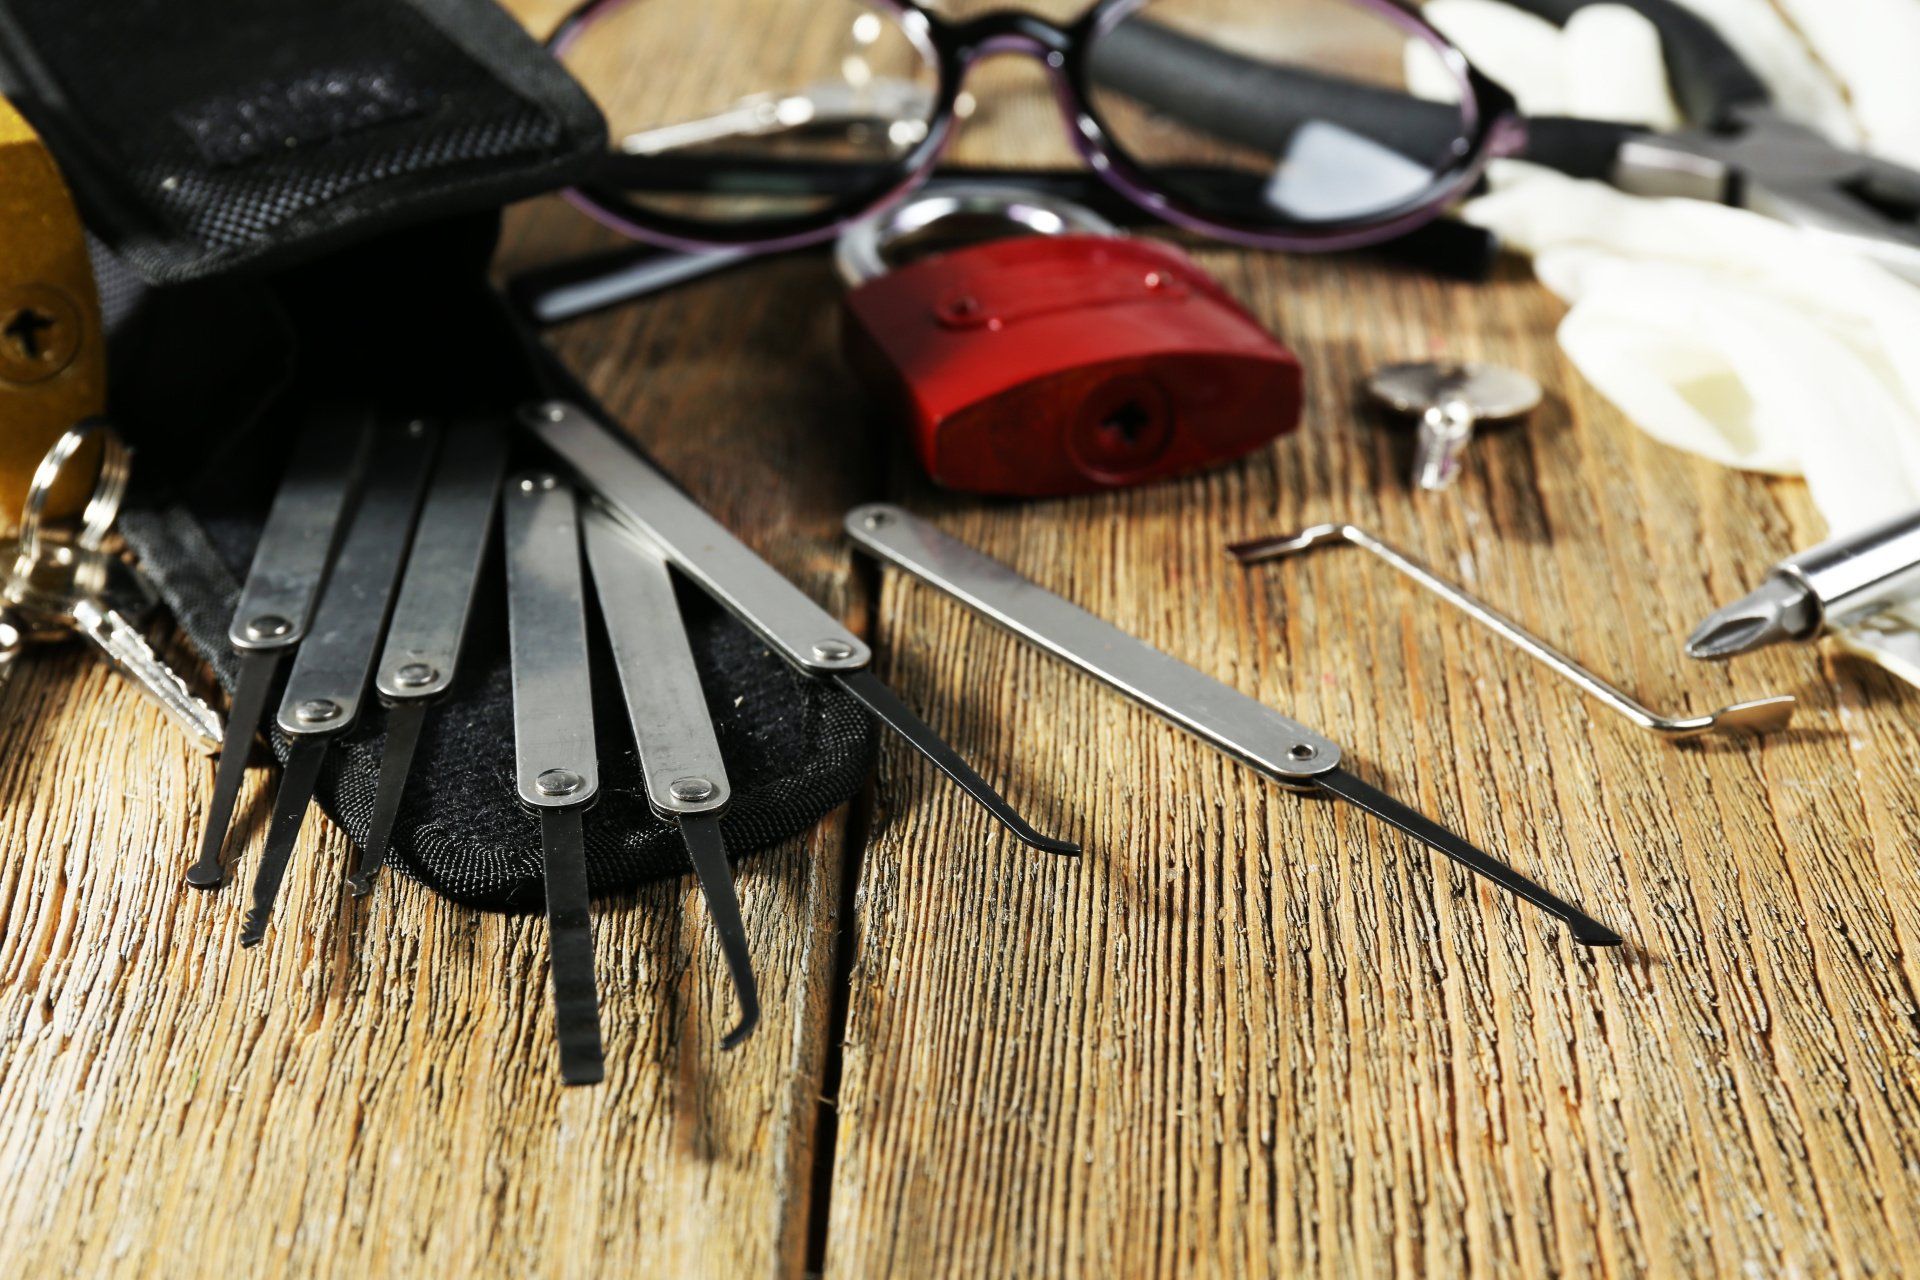 lock repair tools & padlock